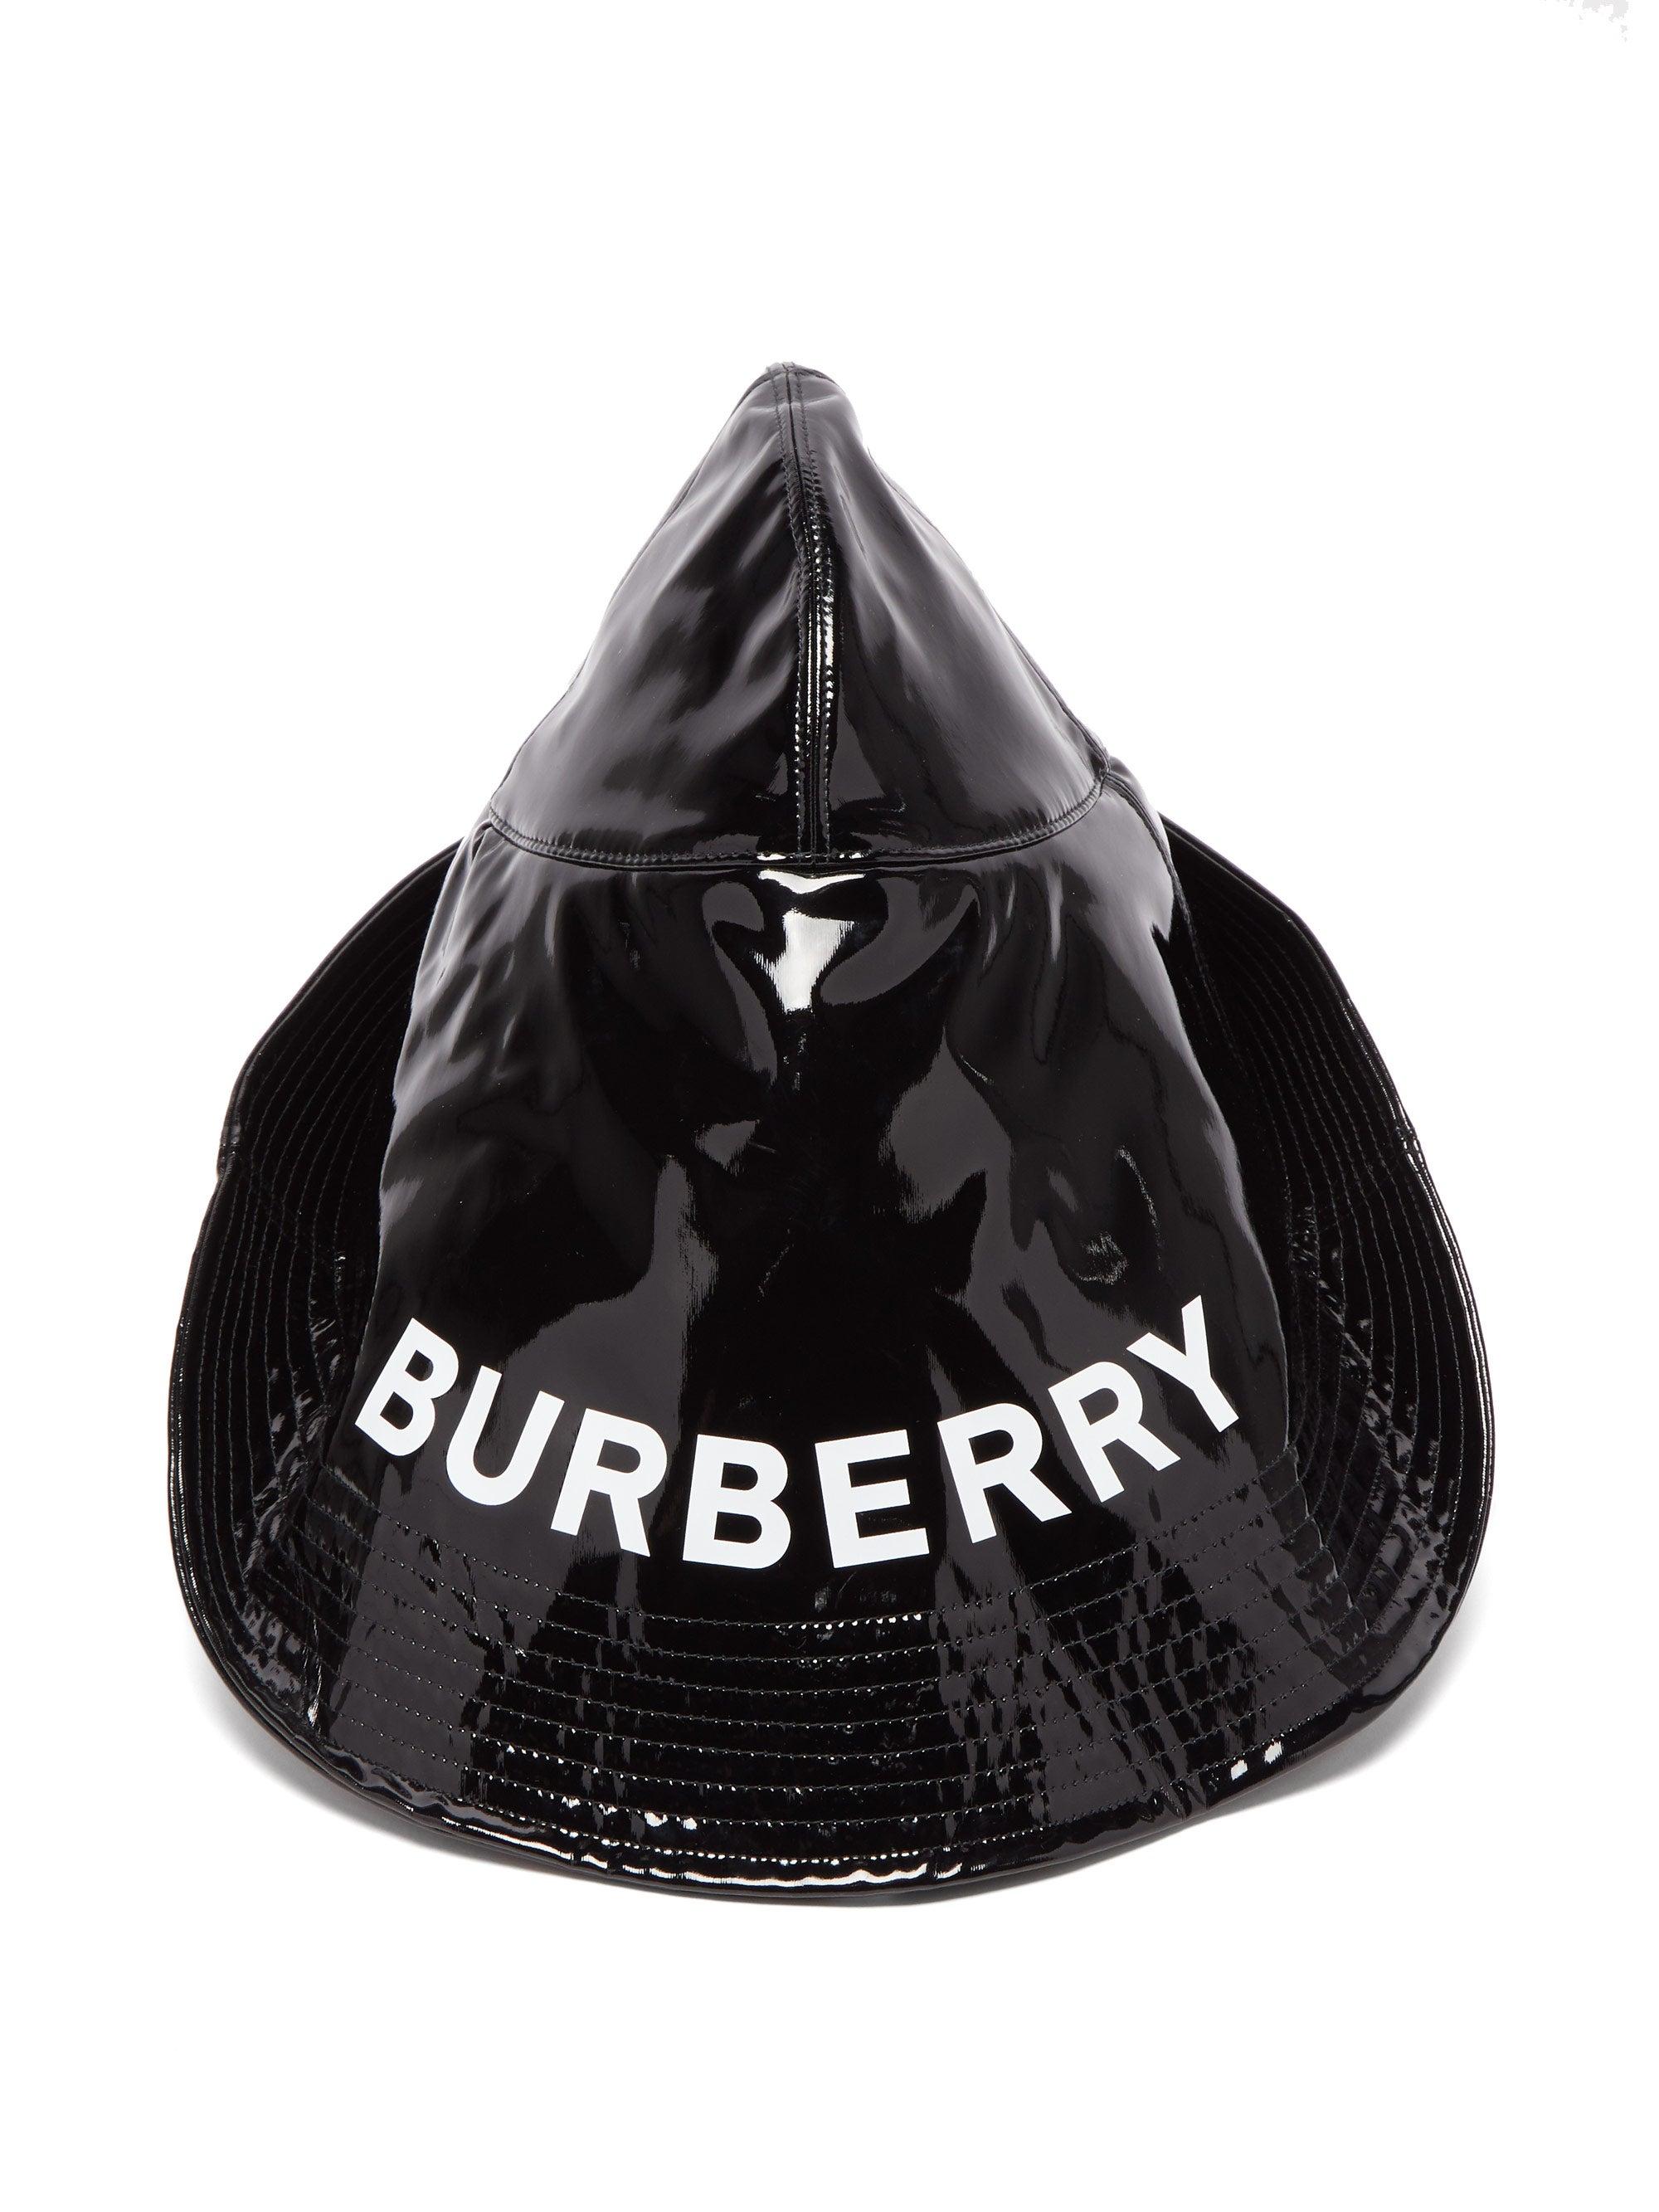 Burberry Logo-printed Vinyl Rain Hat in Black for Men - Lyst